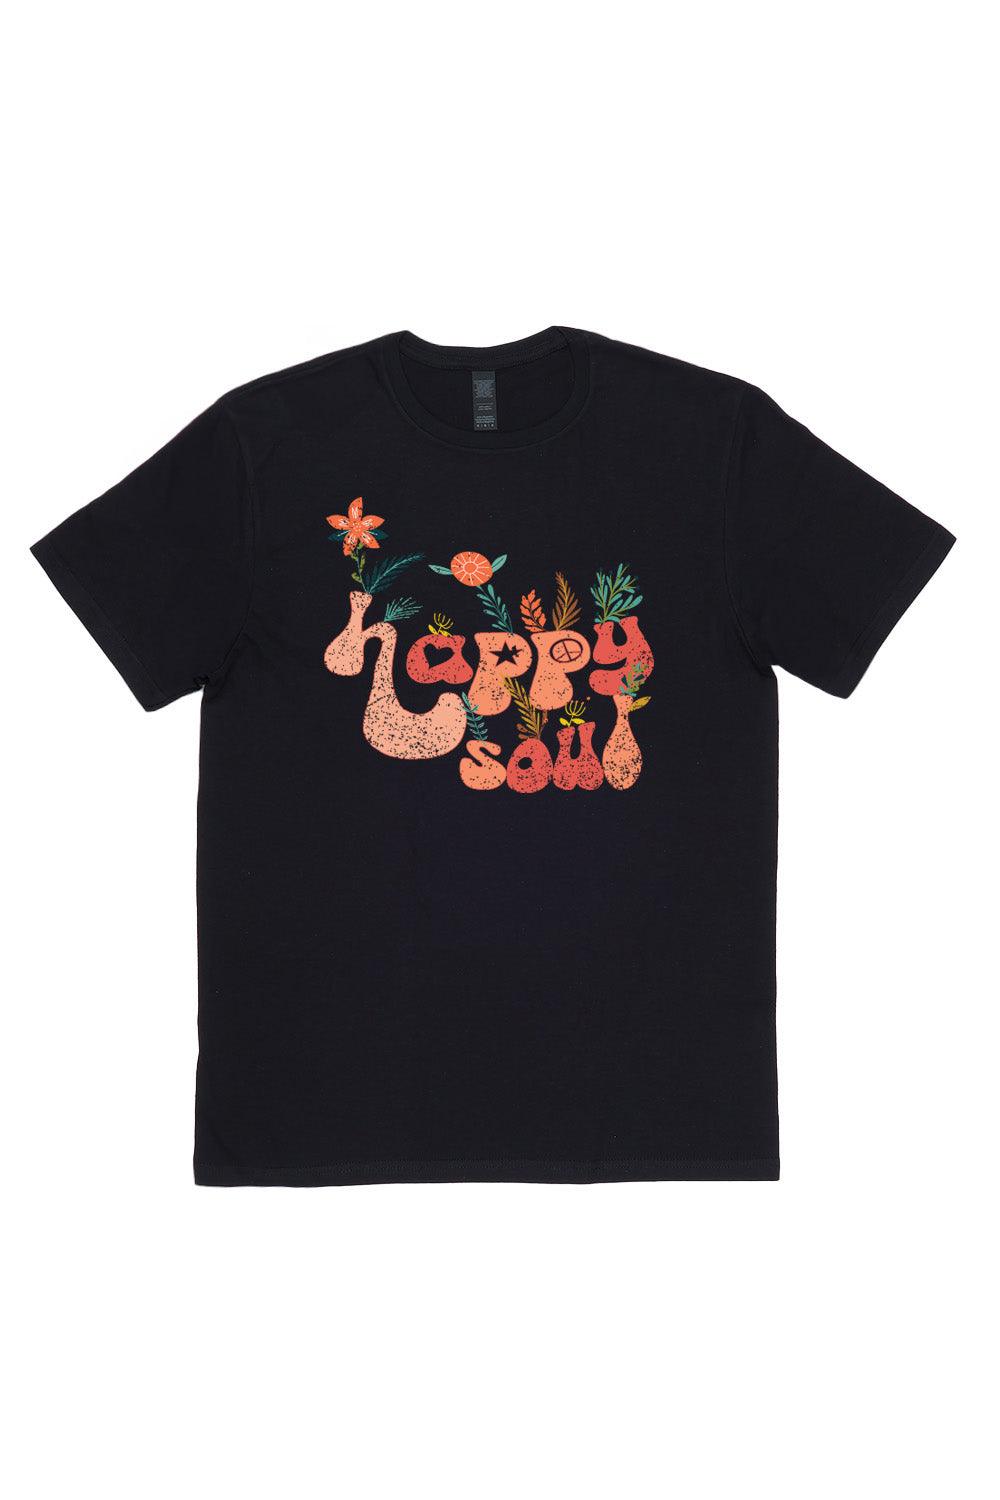 Happy Soul T-Shirt in Black (Custom Packs)